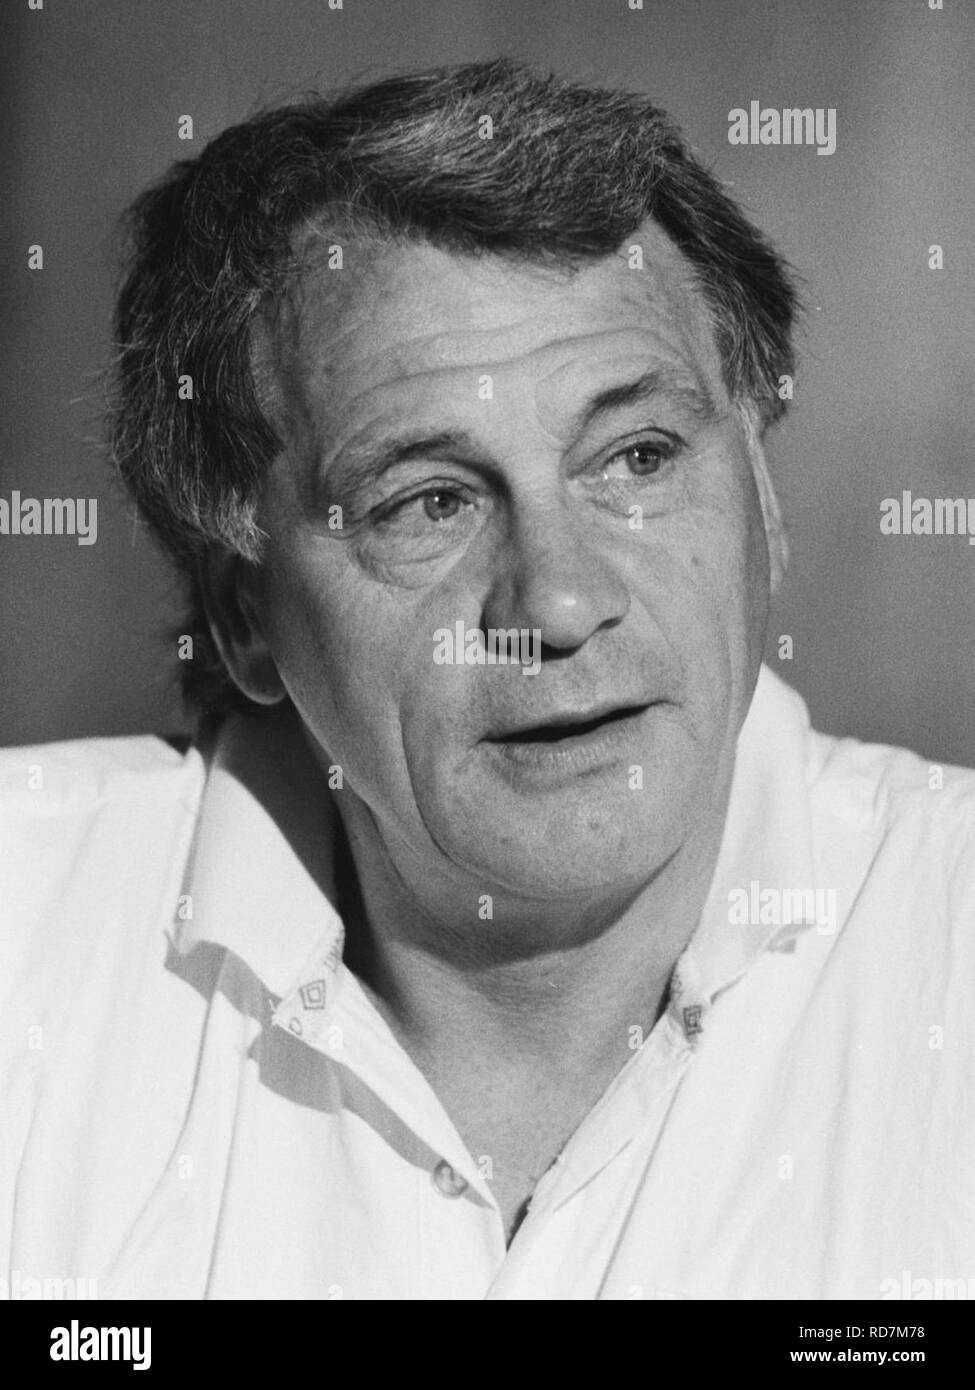 934-2658, Bobby Robson, Netherlands, 14-06-1988. Stock Photo